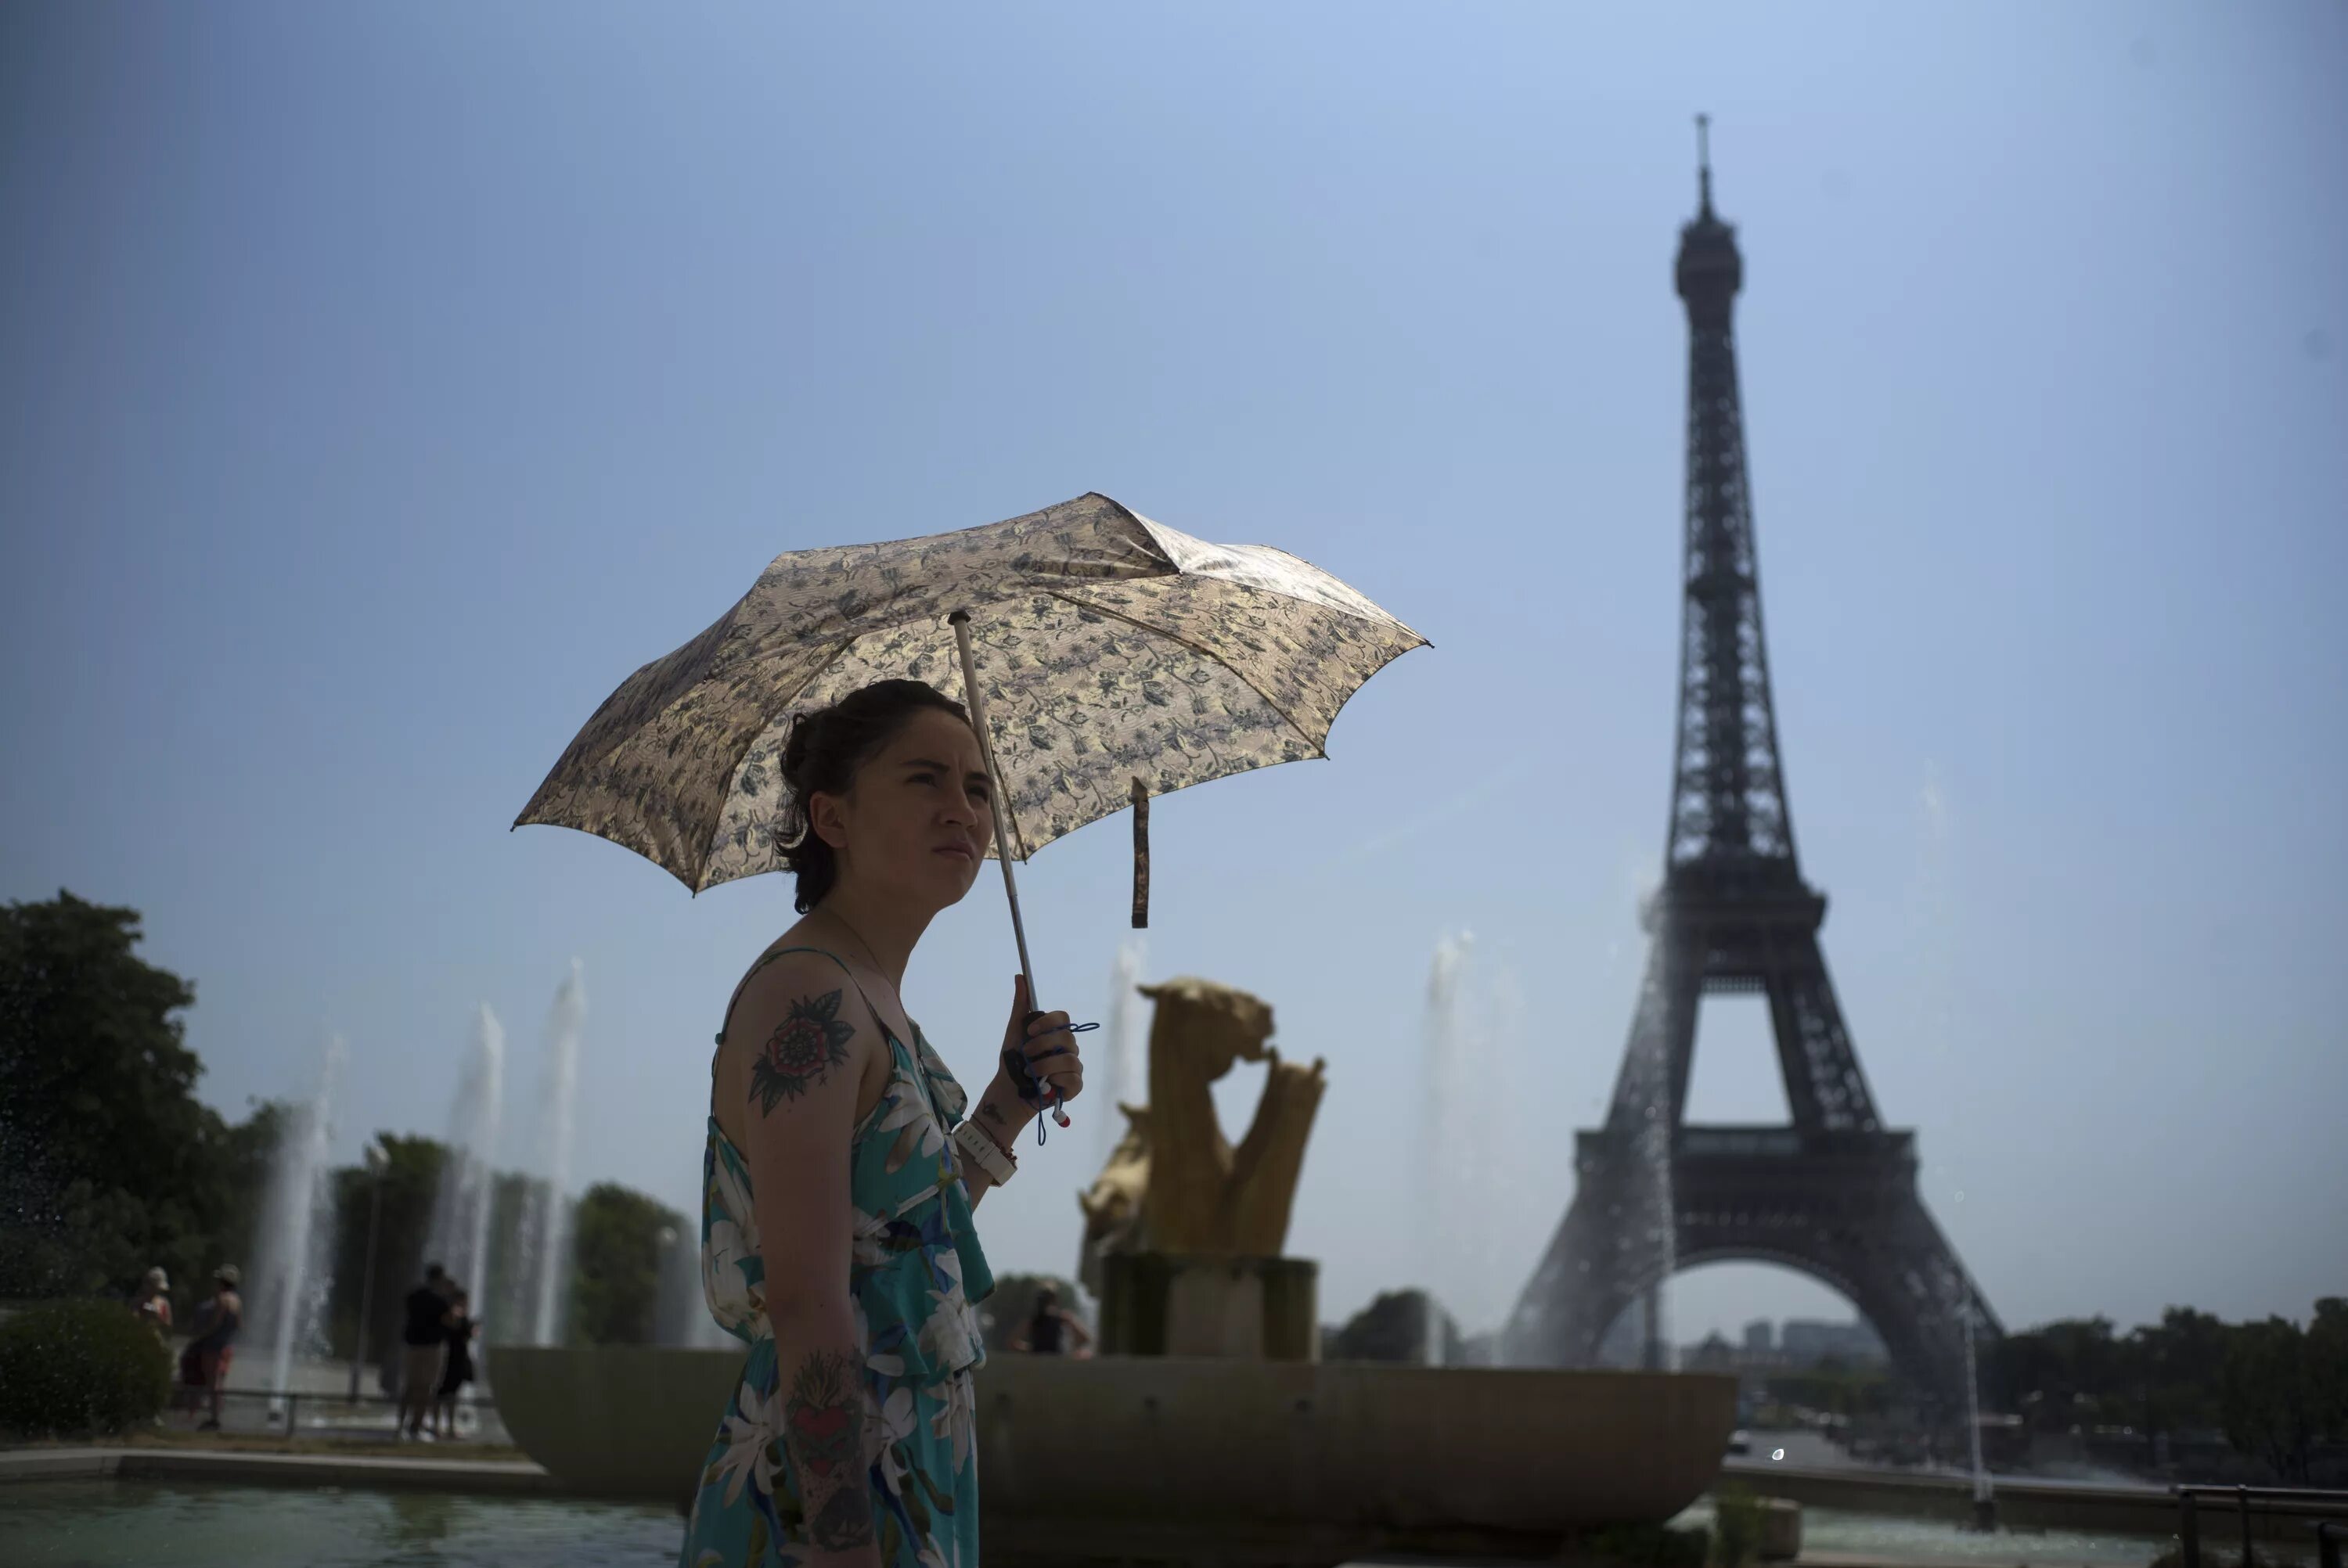 Улицы Парижа аномальная жара. Ббс Париж Париж. Paris weather. Эйфелева башня расплавилась от жары.